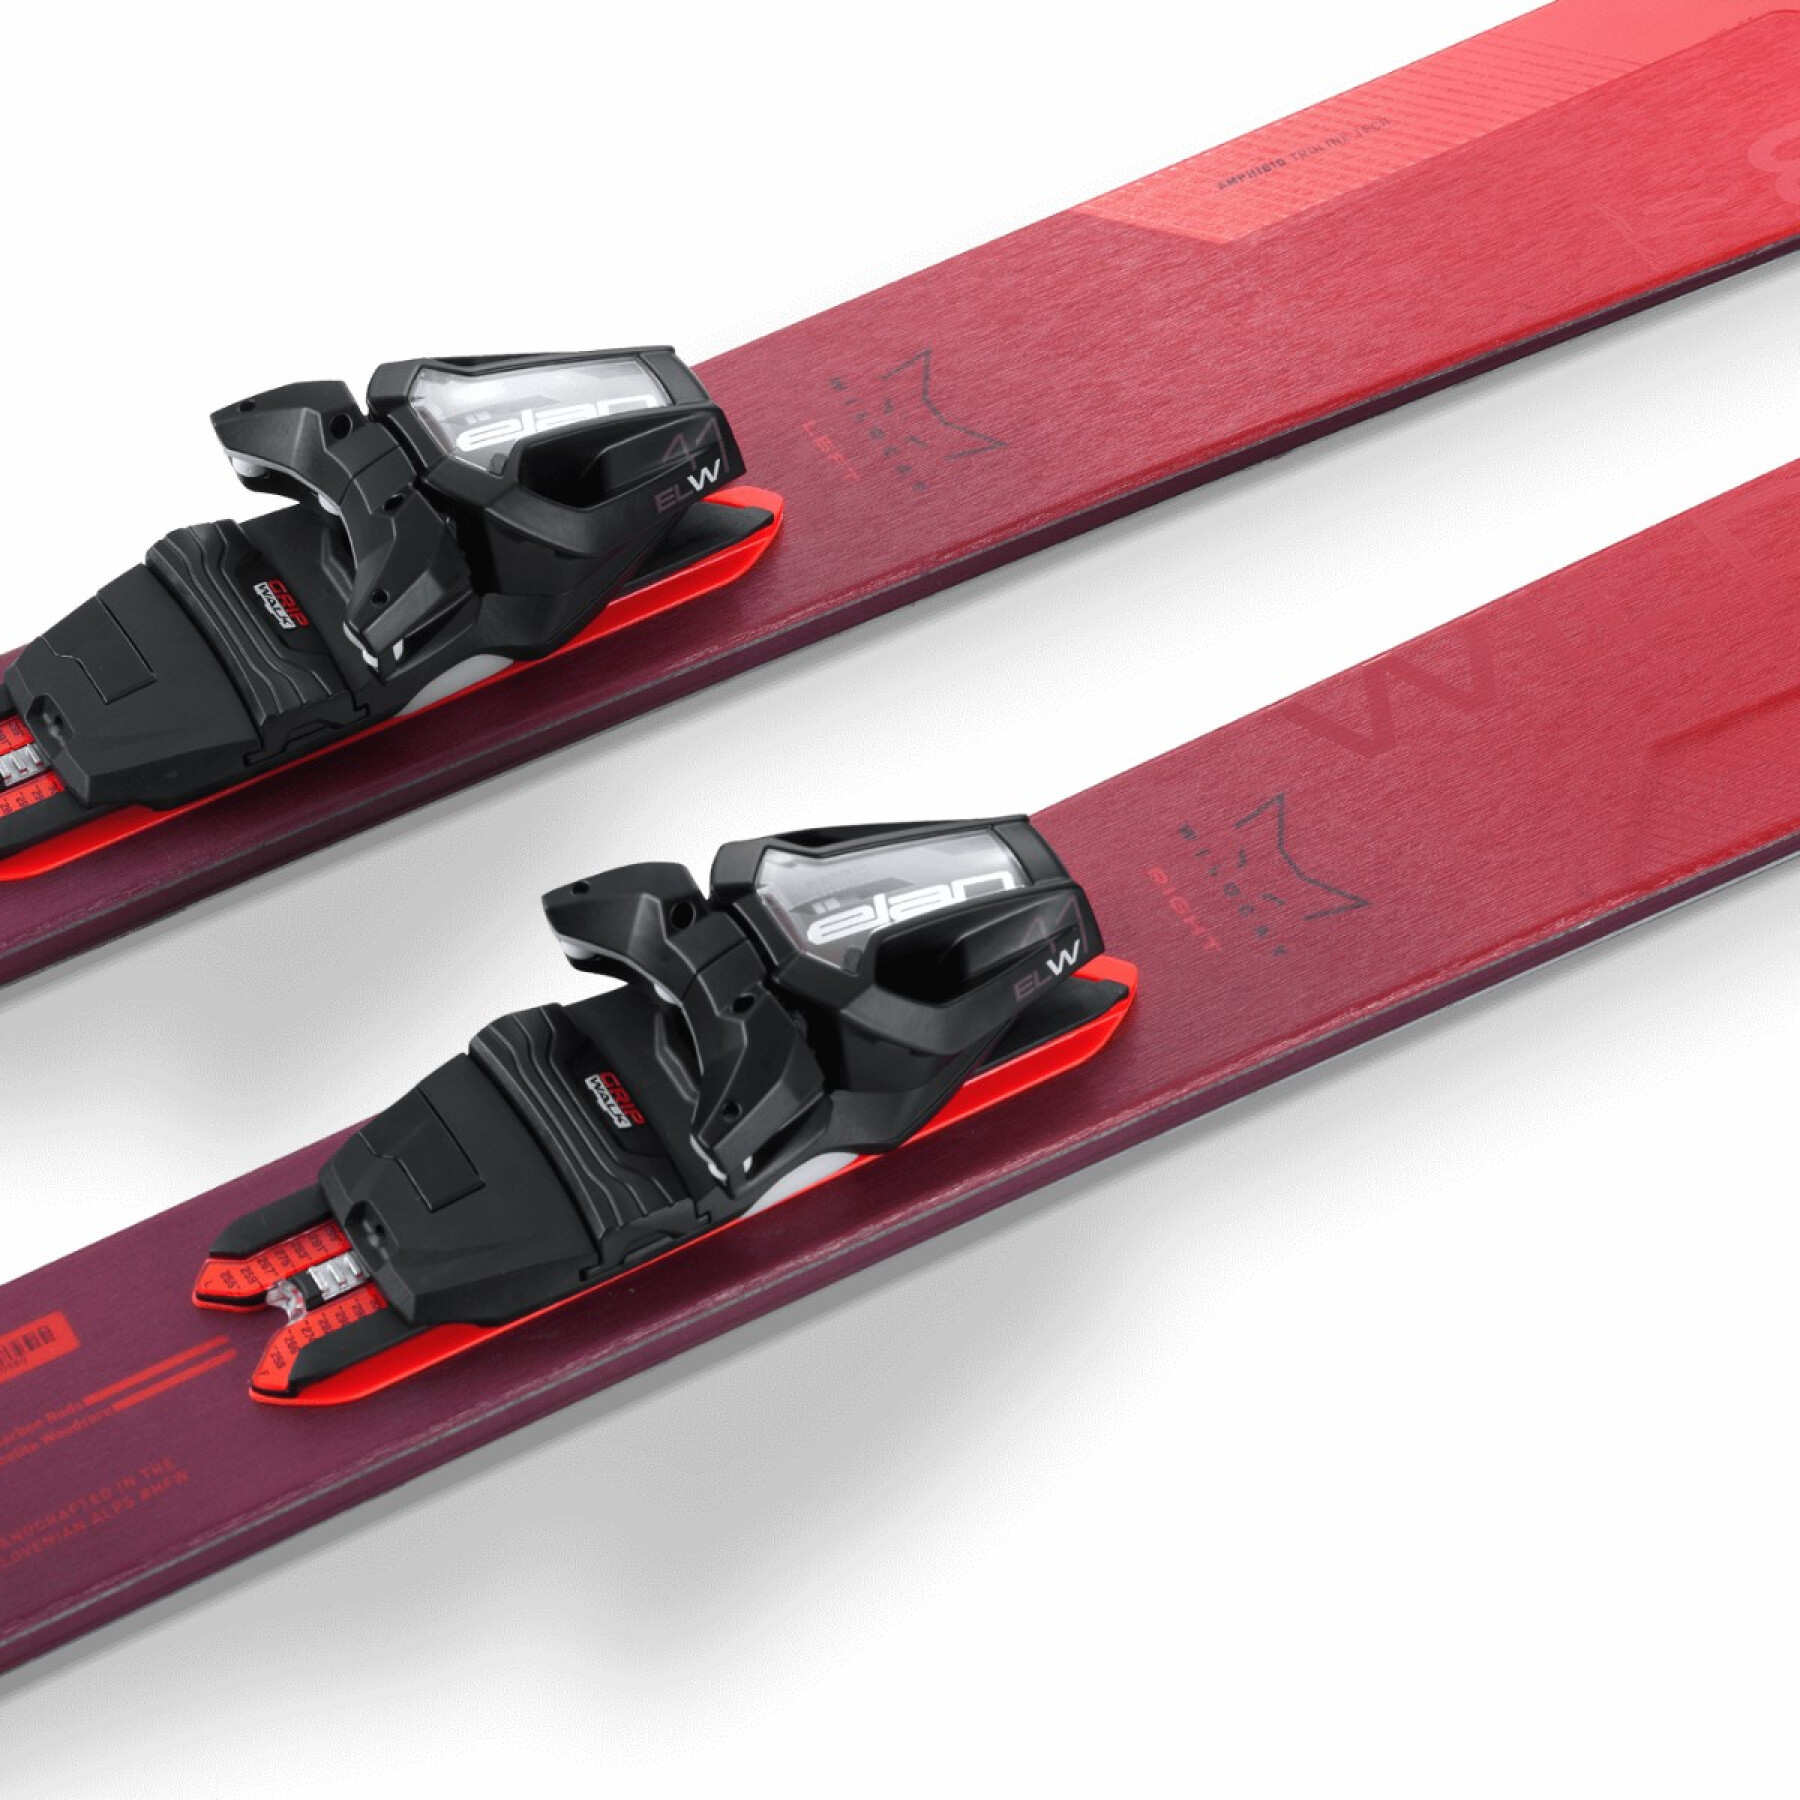 Pack skis Wildcat 86 CX PS ELW 11.0 avec fixations Elan